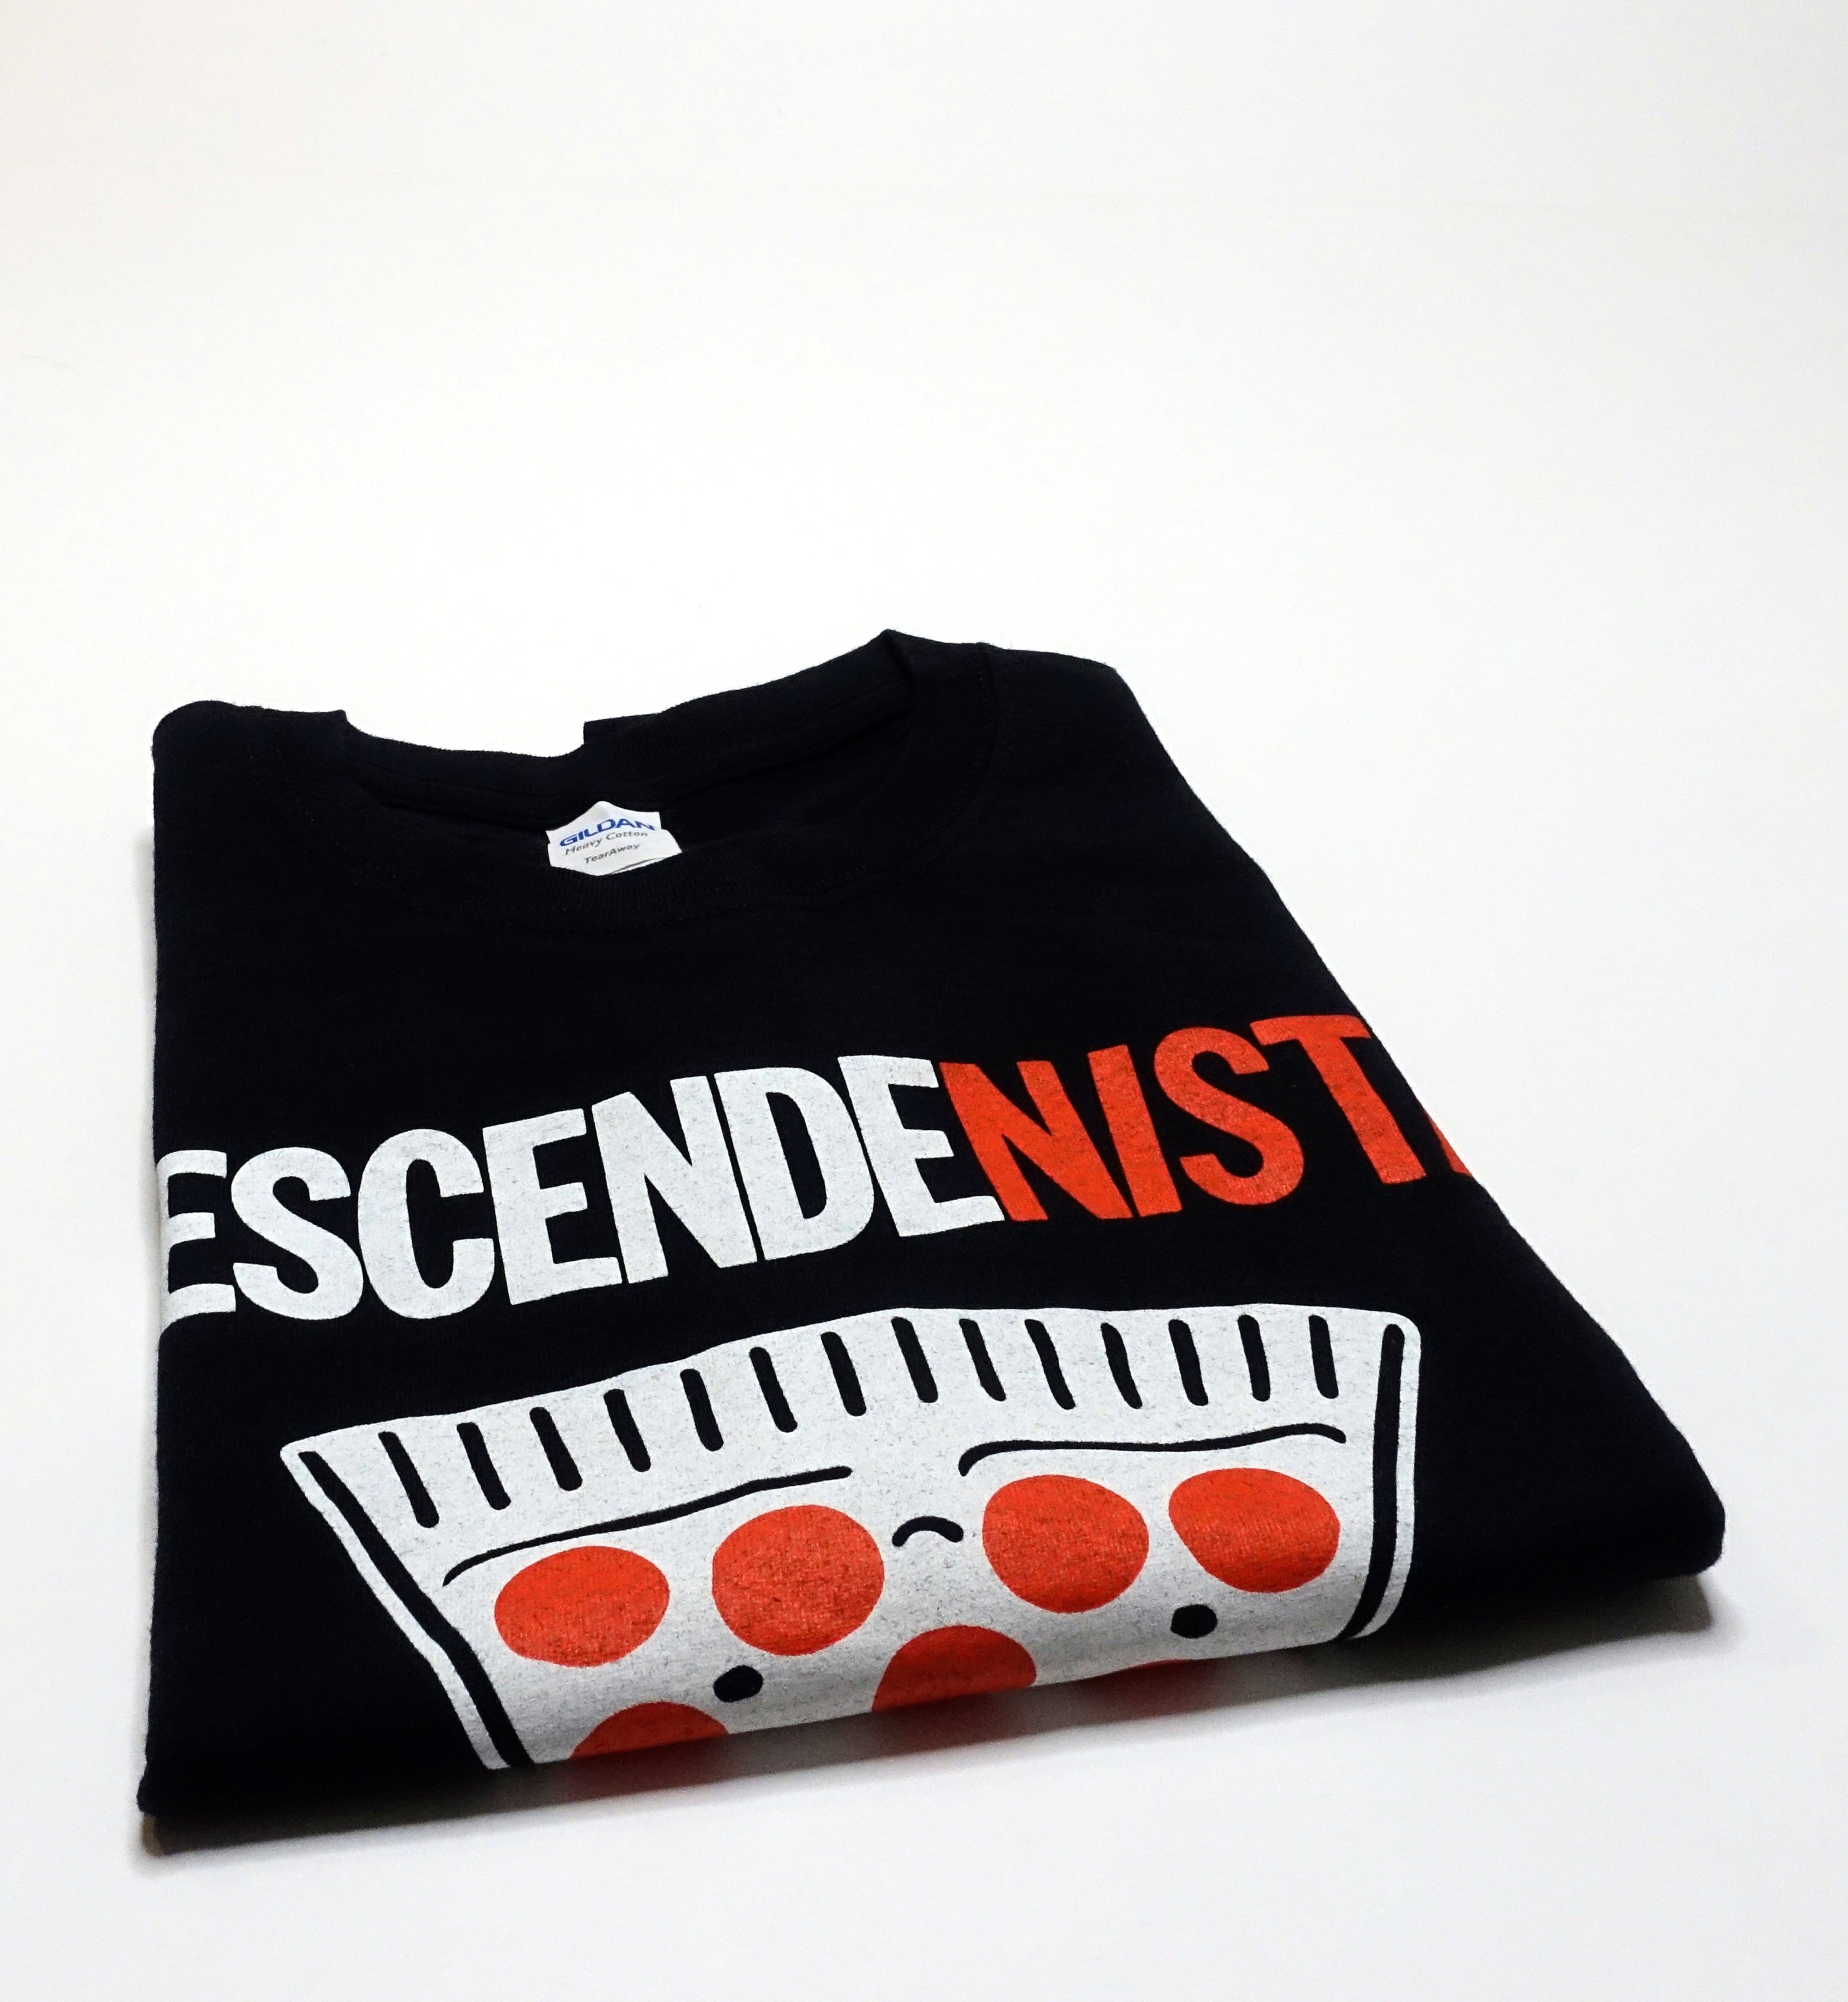 Descendents - Pizzanista Hypercaffium Release Day Shirt NO Box Size XL